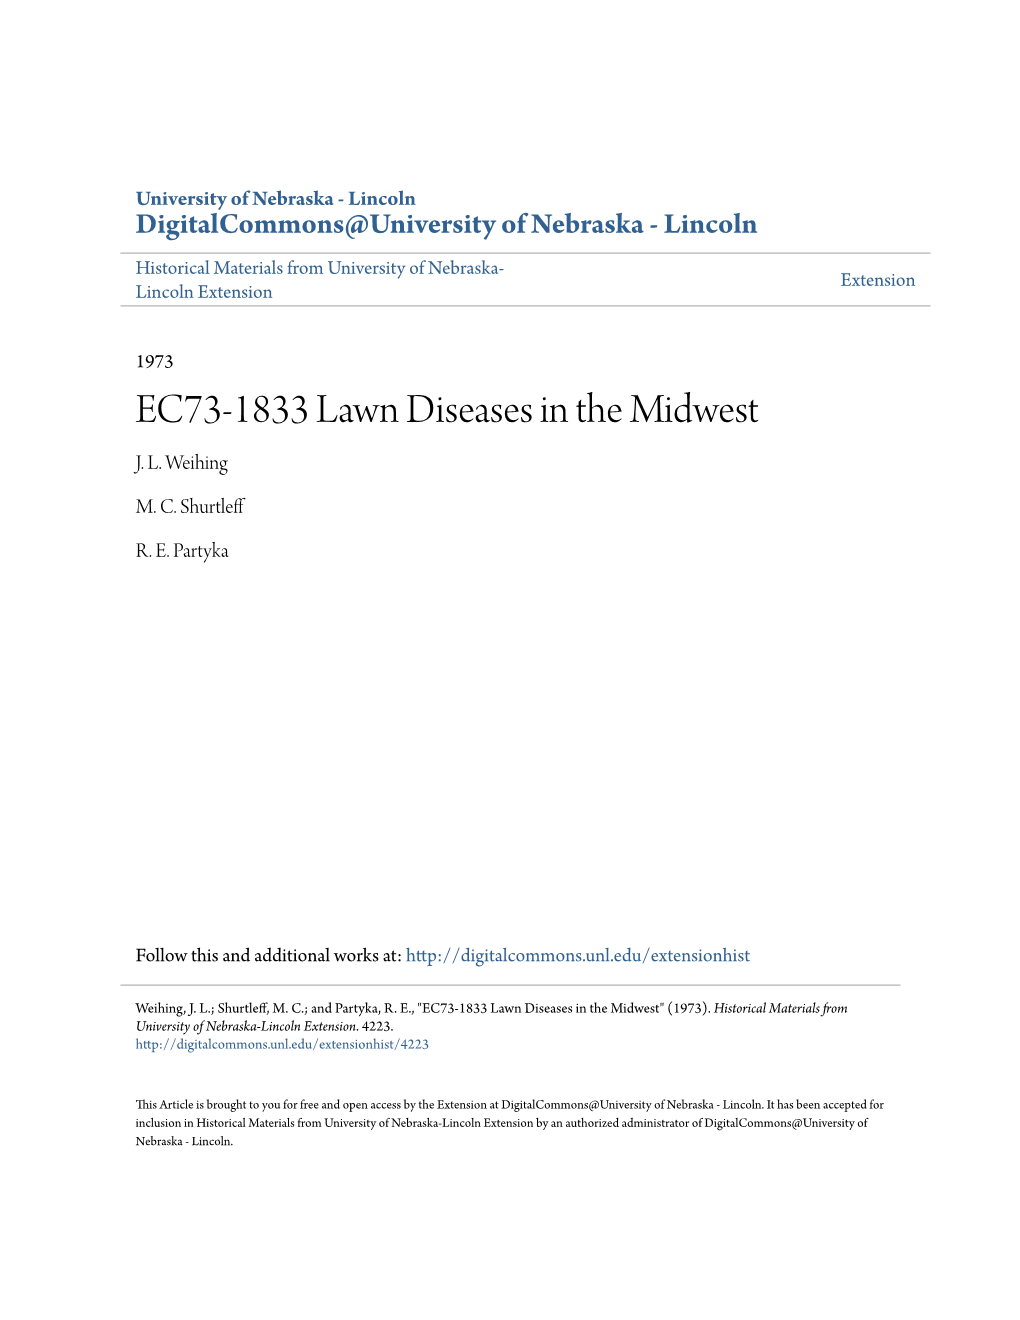 EC73-1833 Lawn Diseases in the Midwest J